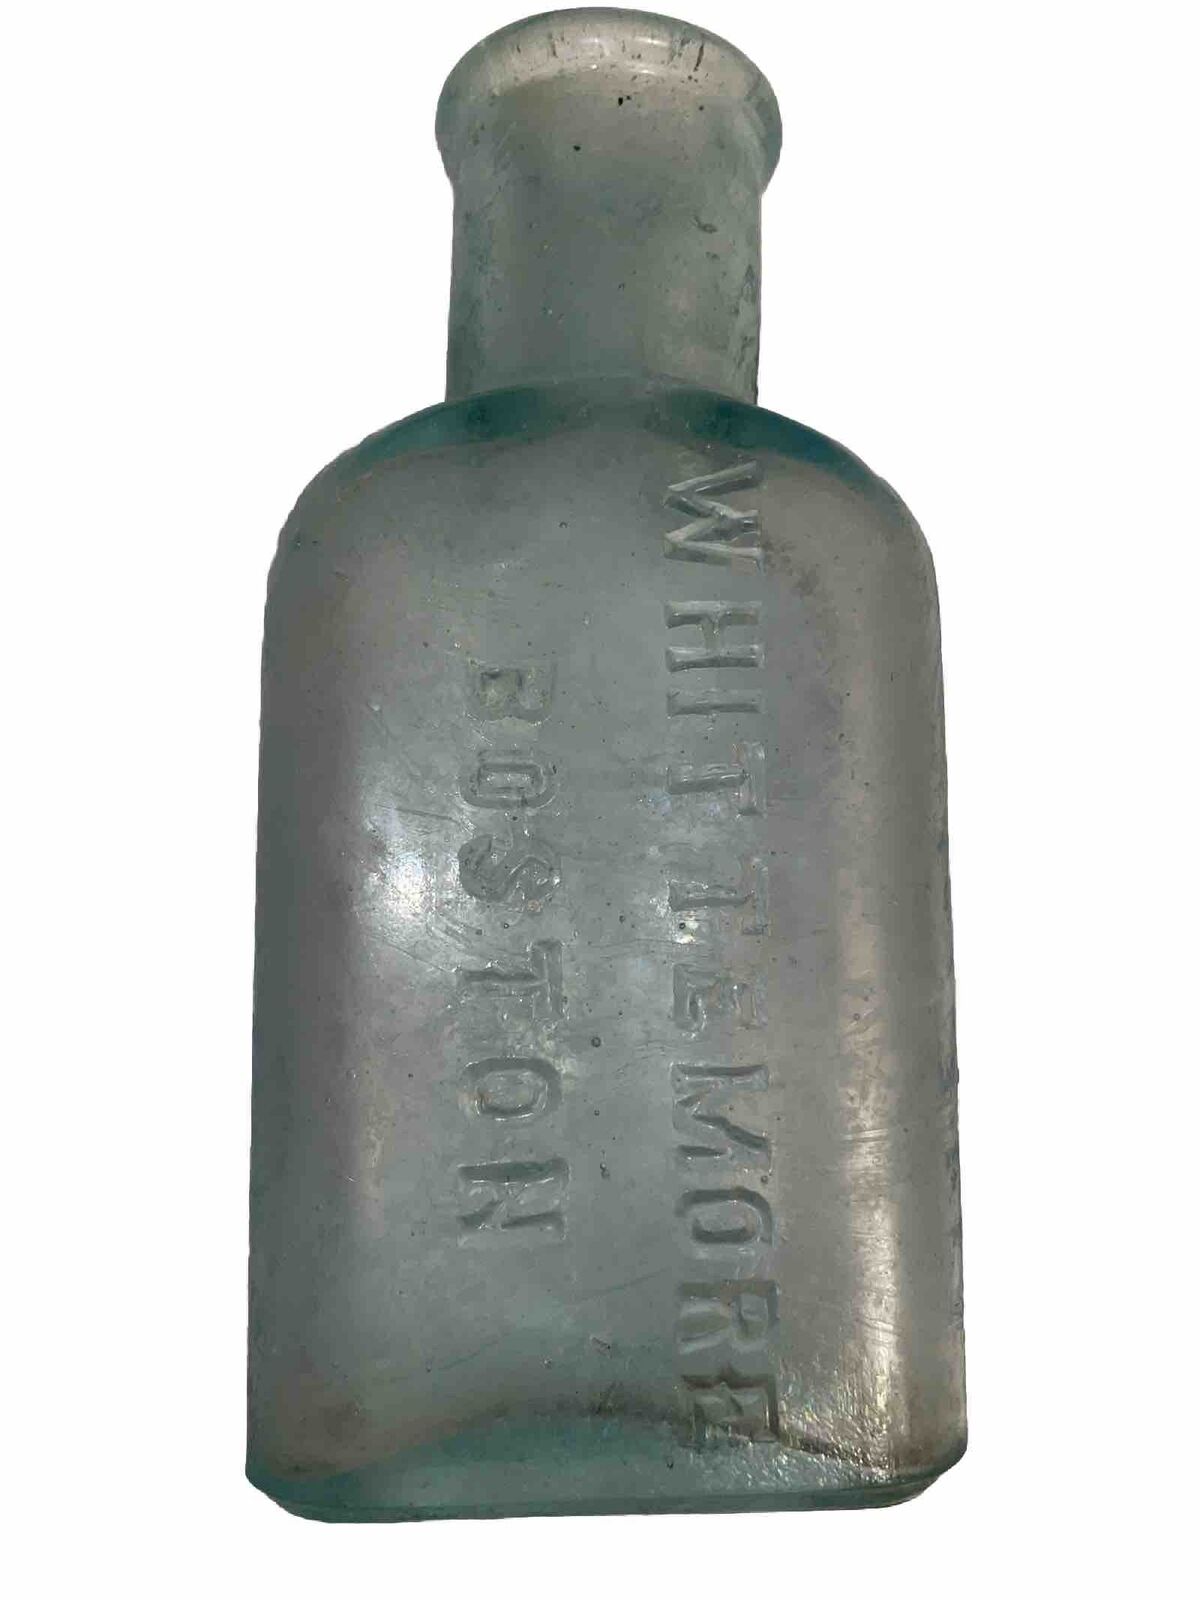 NICE Aqua Whittemore Boston French Gloss Shoe Polish Bottle circa 1900